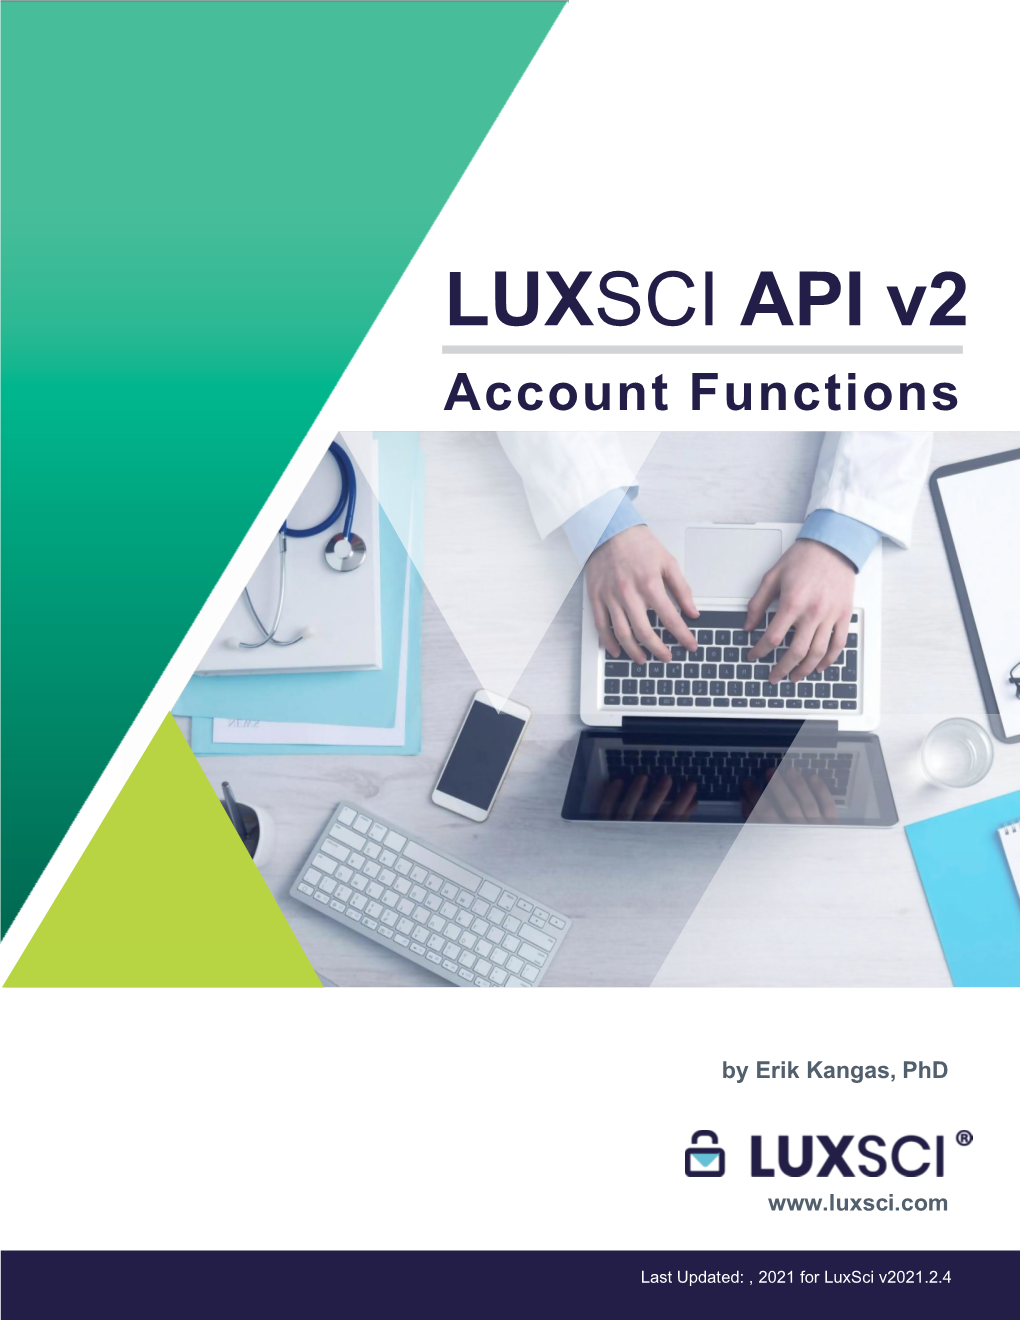 LUXSCI API V2 Account Functions